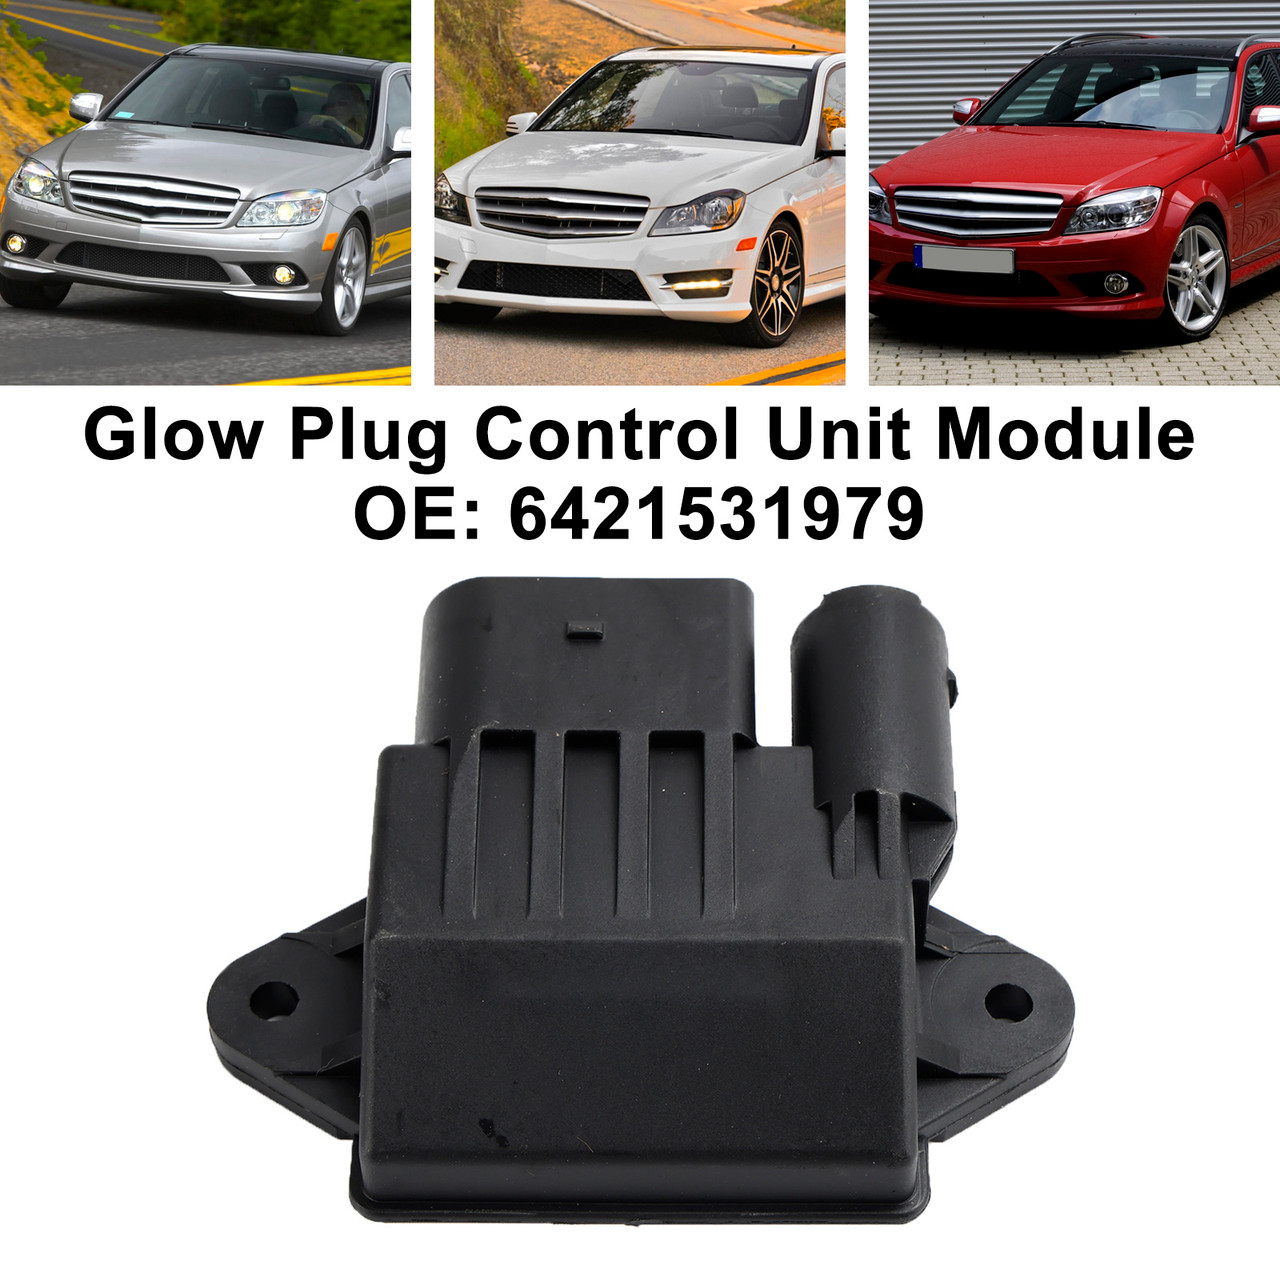 Glow Plug Control Unit Module for Mercedes E-Class AWD/RWD S211 W211 6421531979